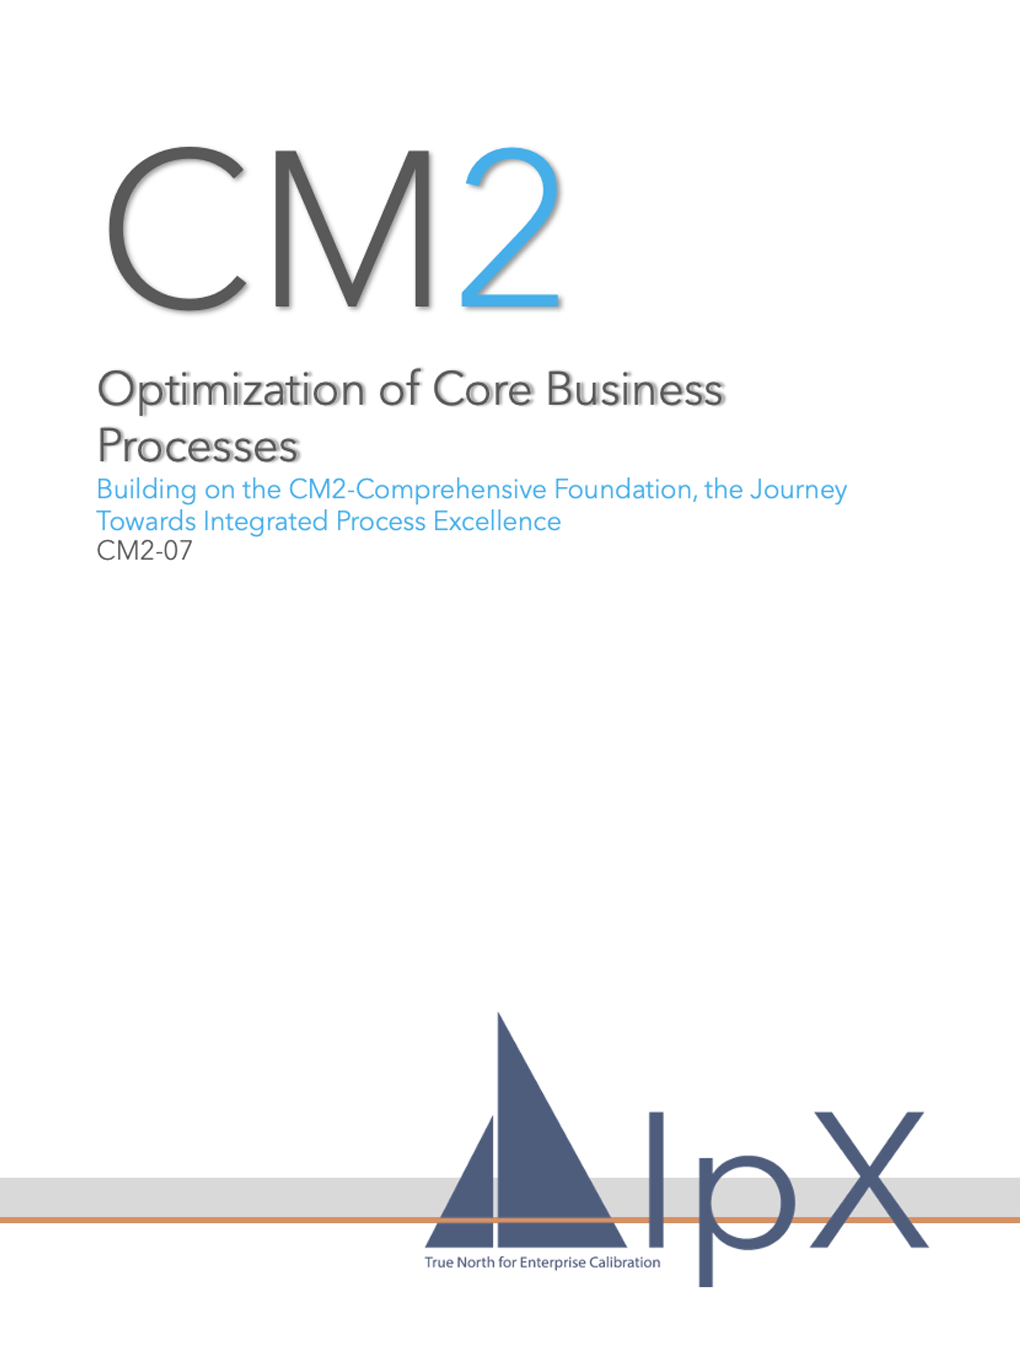 Optimization of Core Business Processes Course